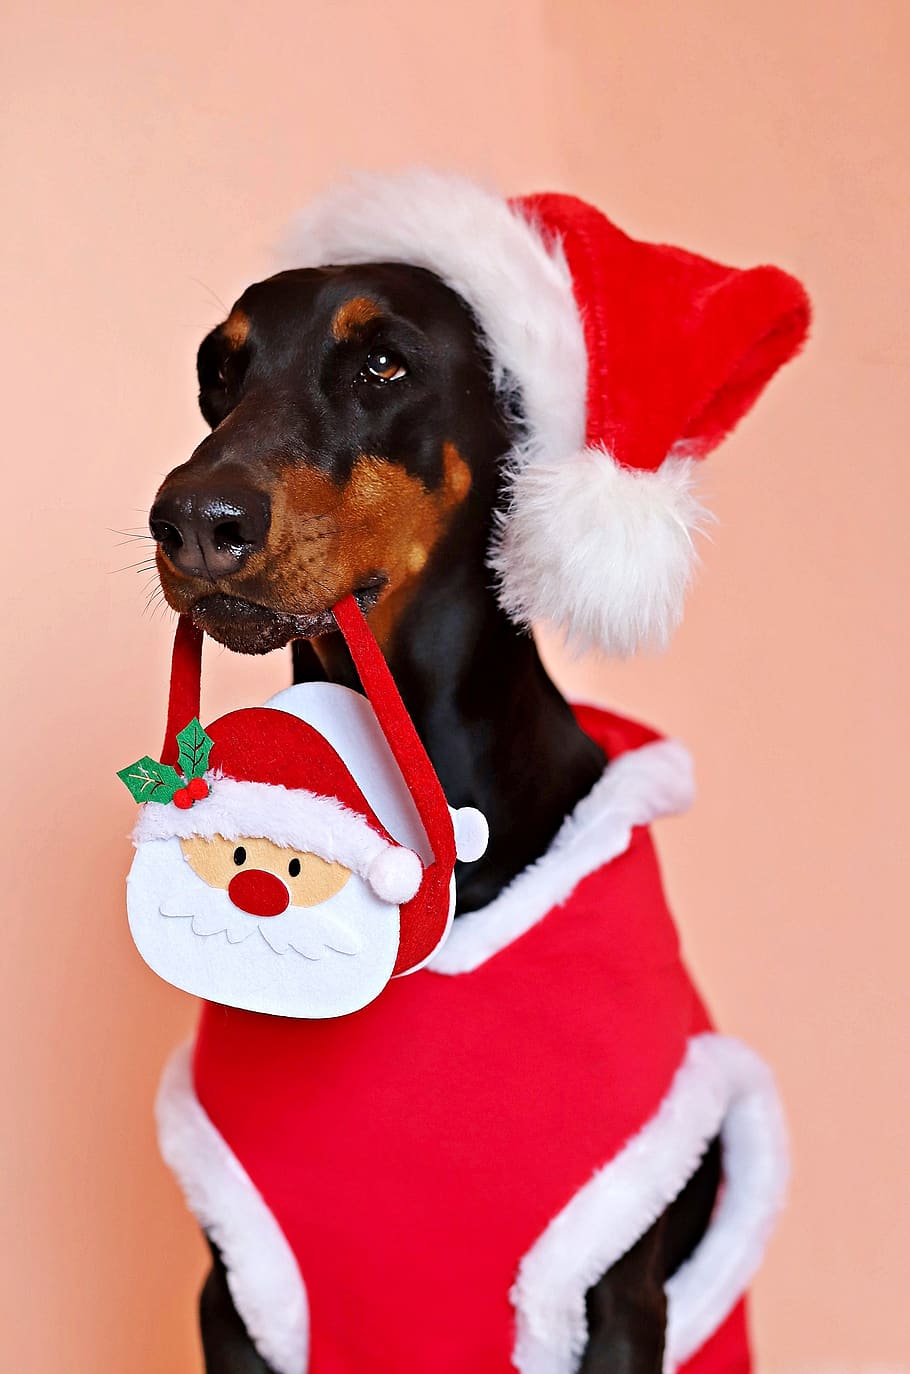 doberman, dog, santa claus, cute, head, cap, dress, animal, one animal, christmas